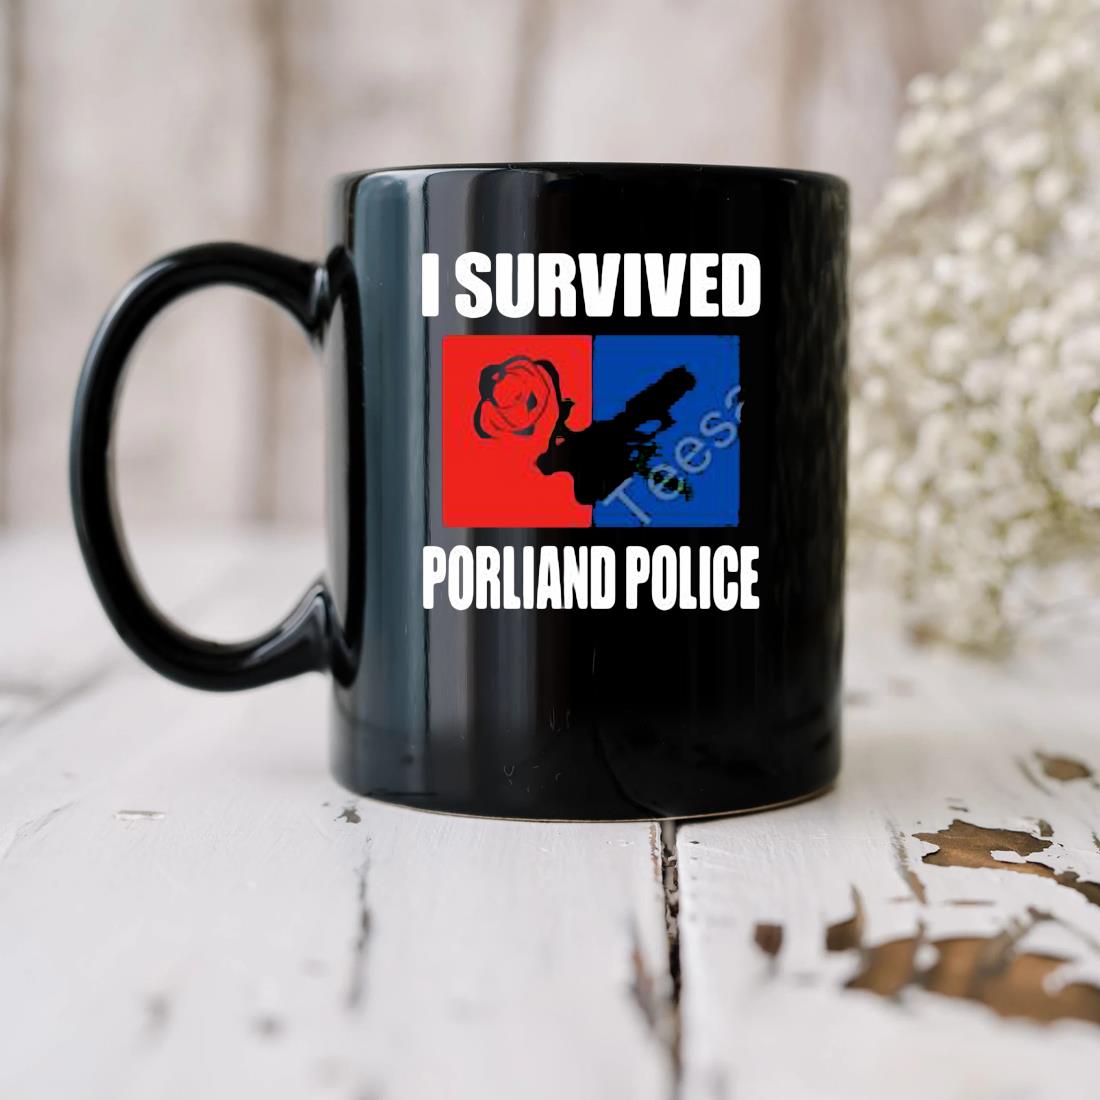 I Survived Porliand Police Mug biu